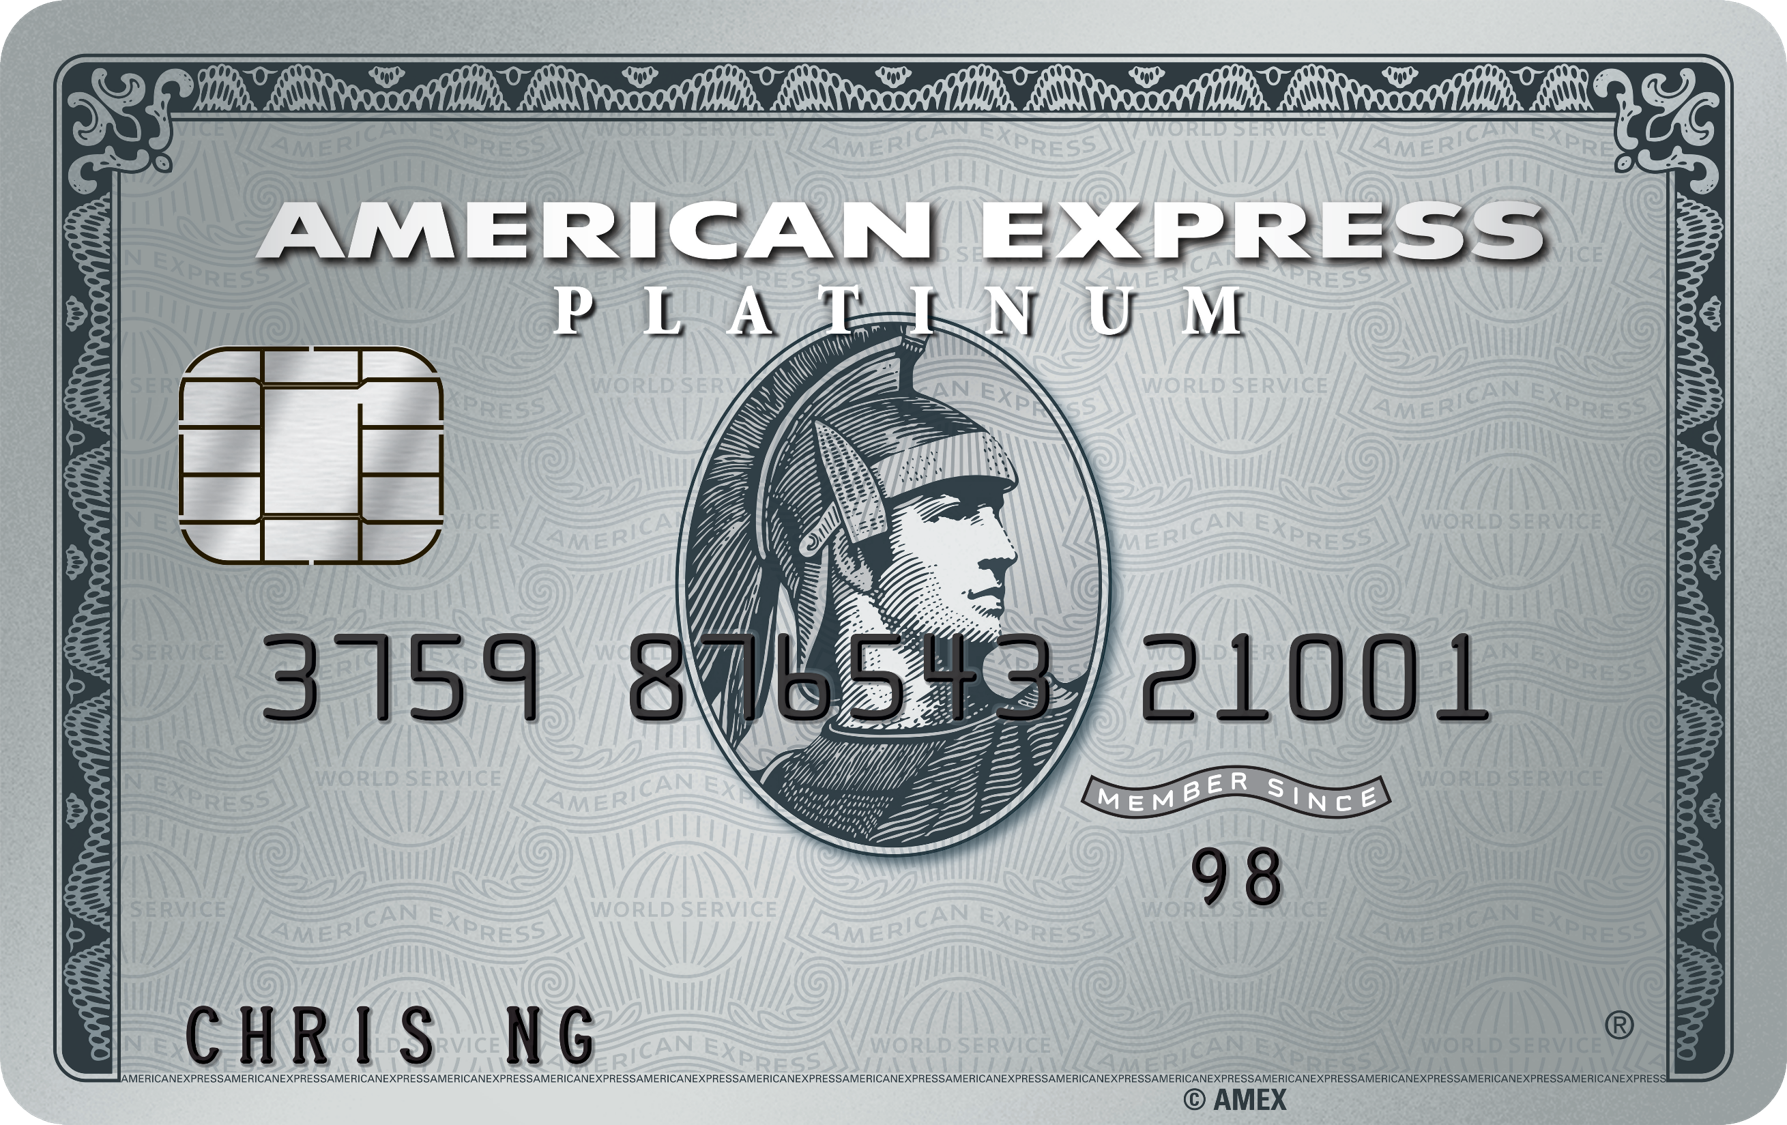 american express platinum travel card benefits